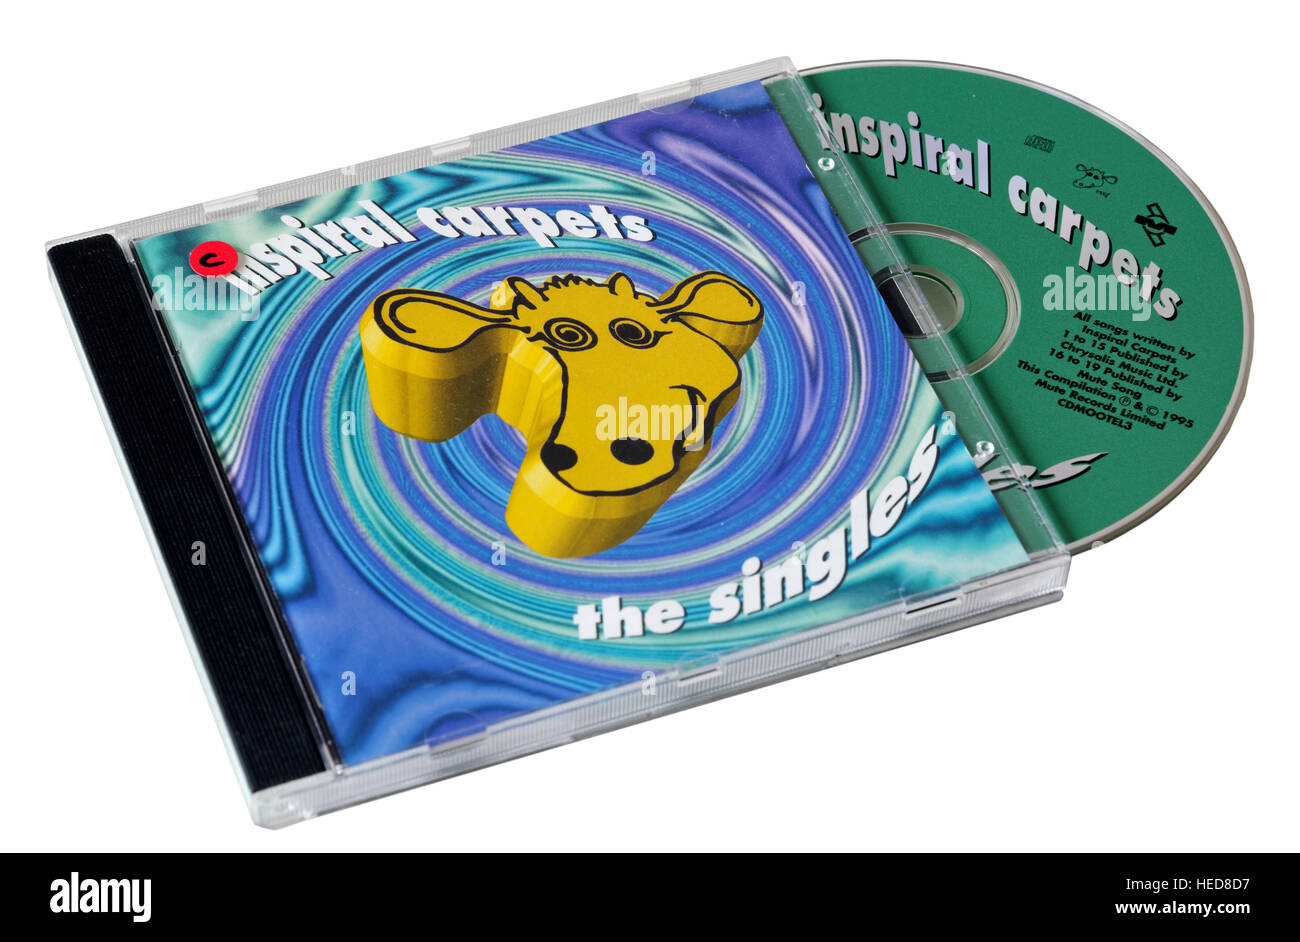 Inspiral Carpets The Singles CD Stock Photo